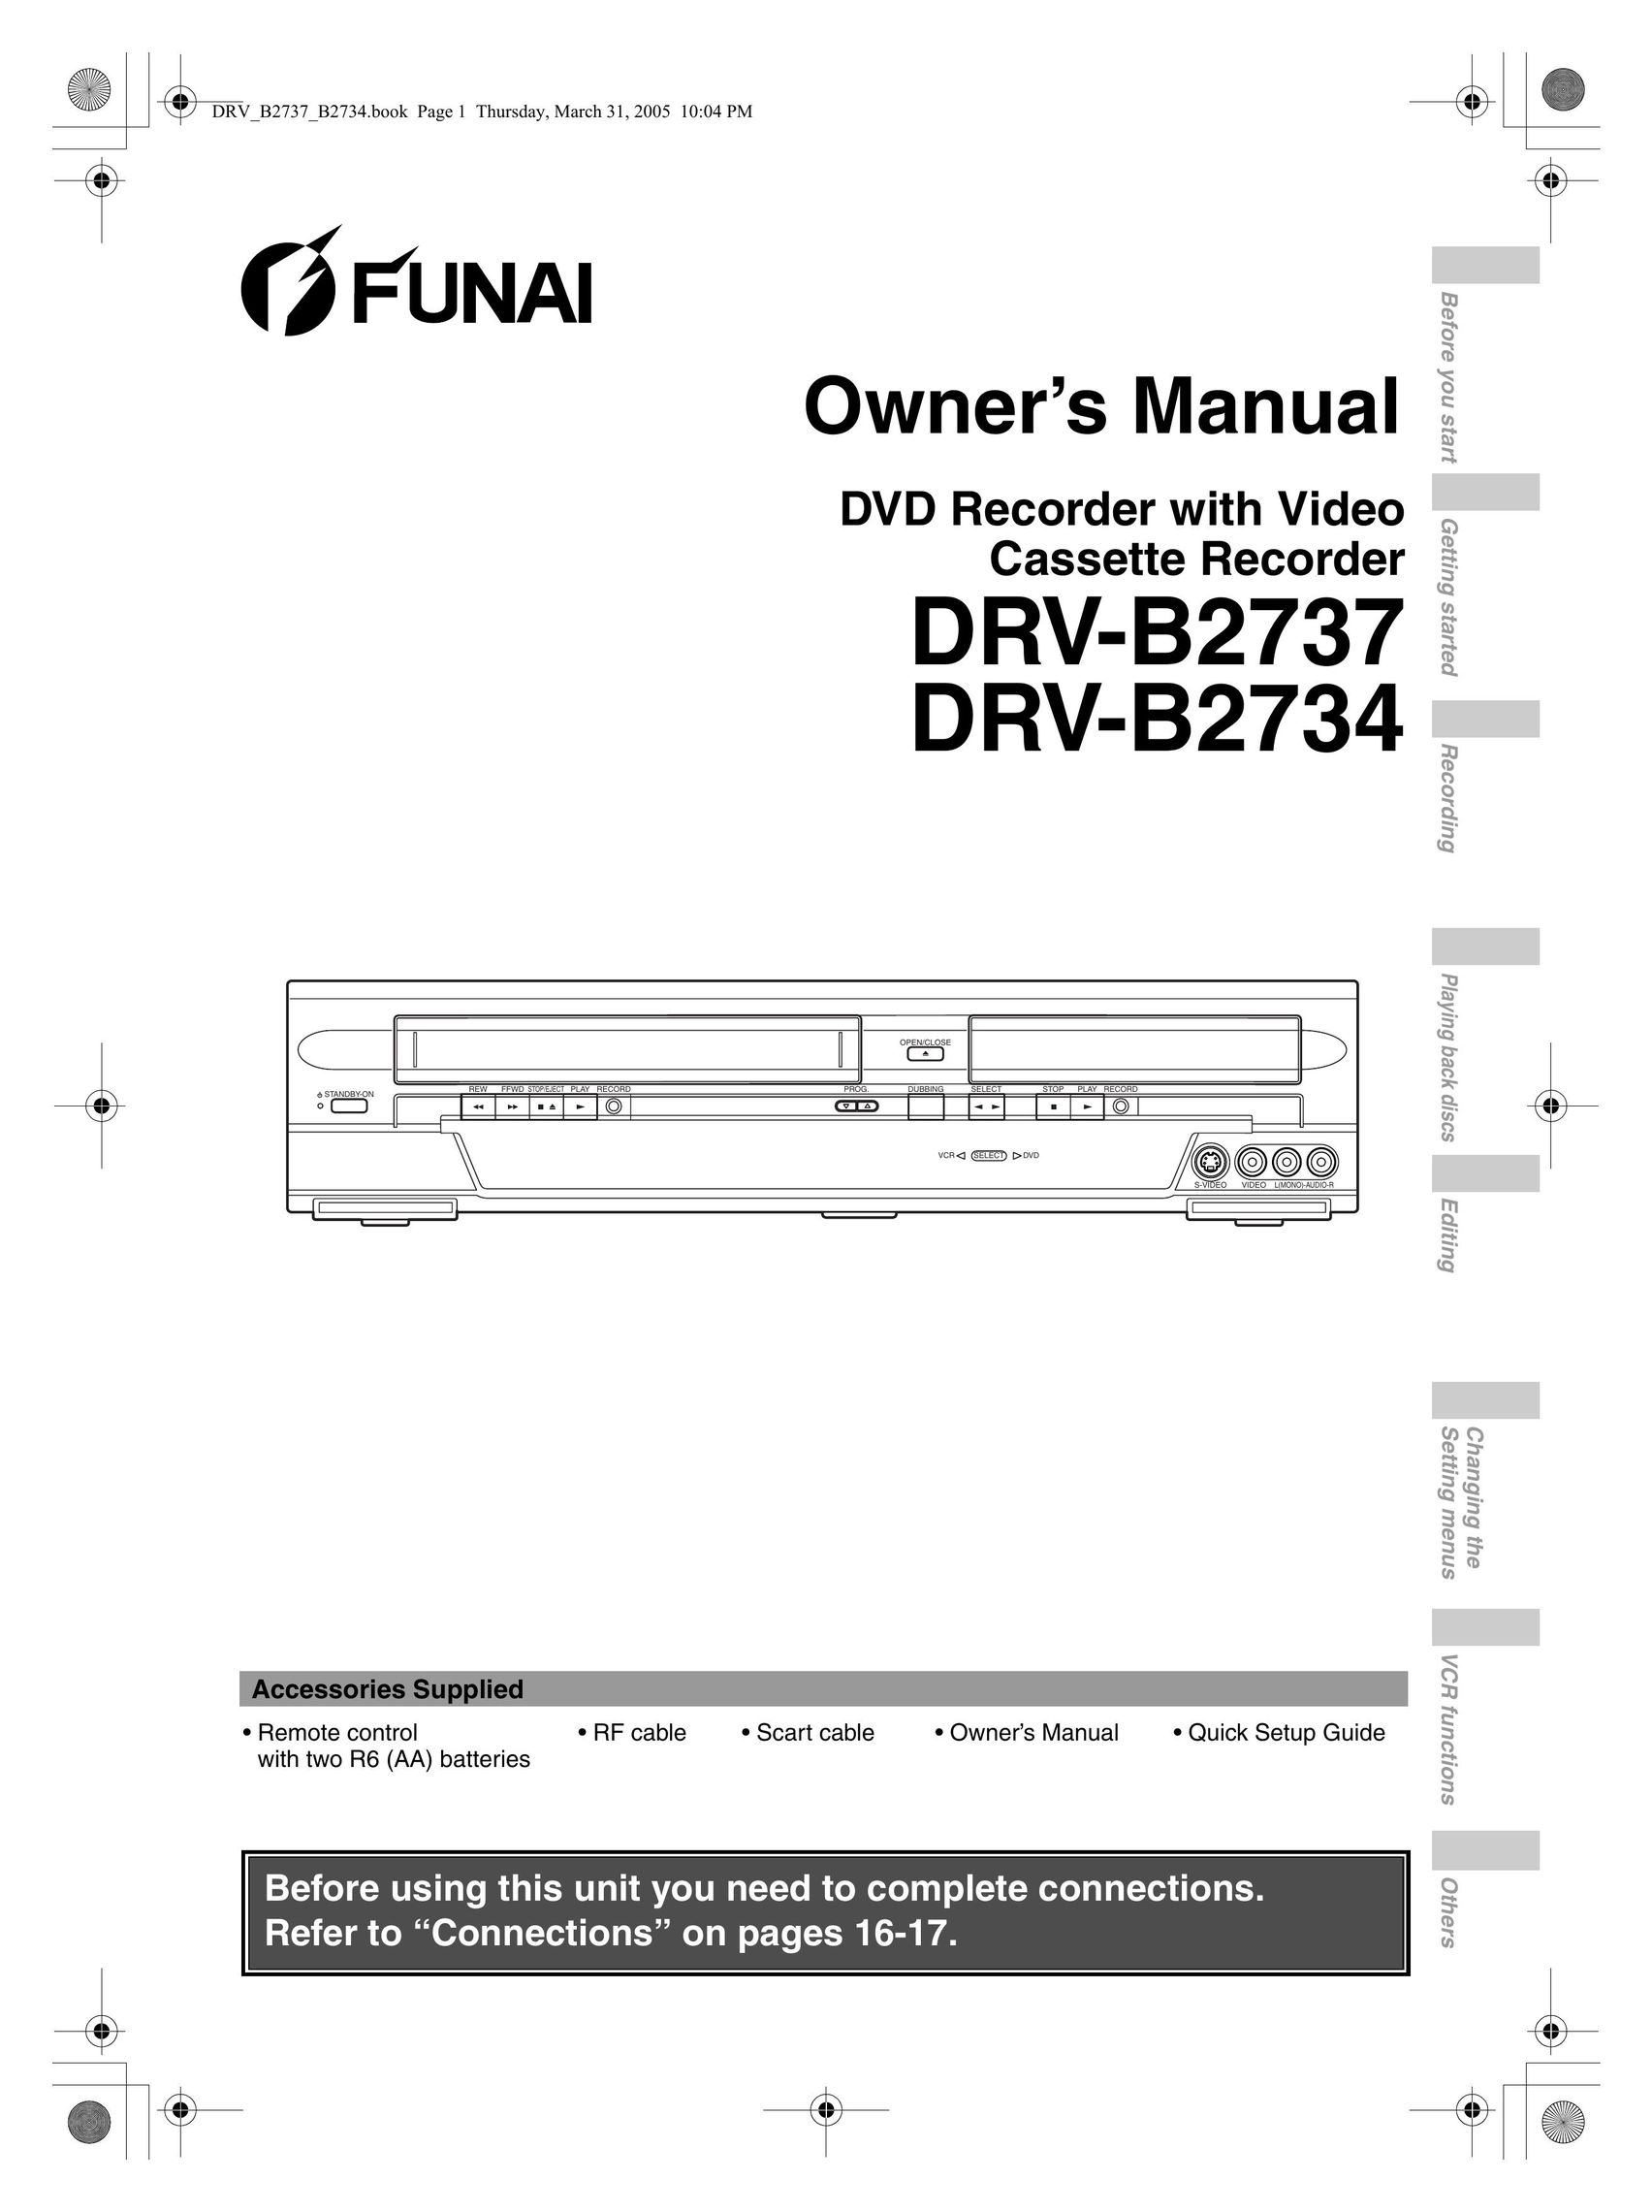 FUNAI DRV-B2734 DVD VCR Combo User Manual